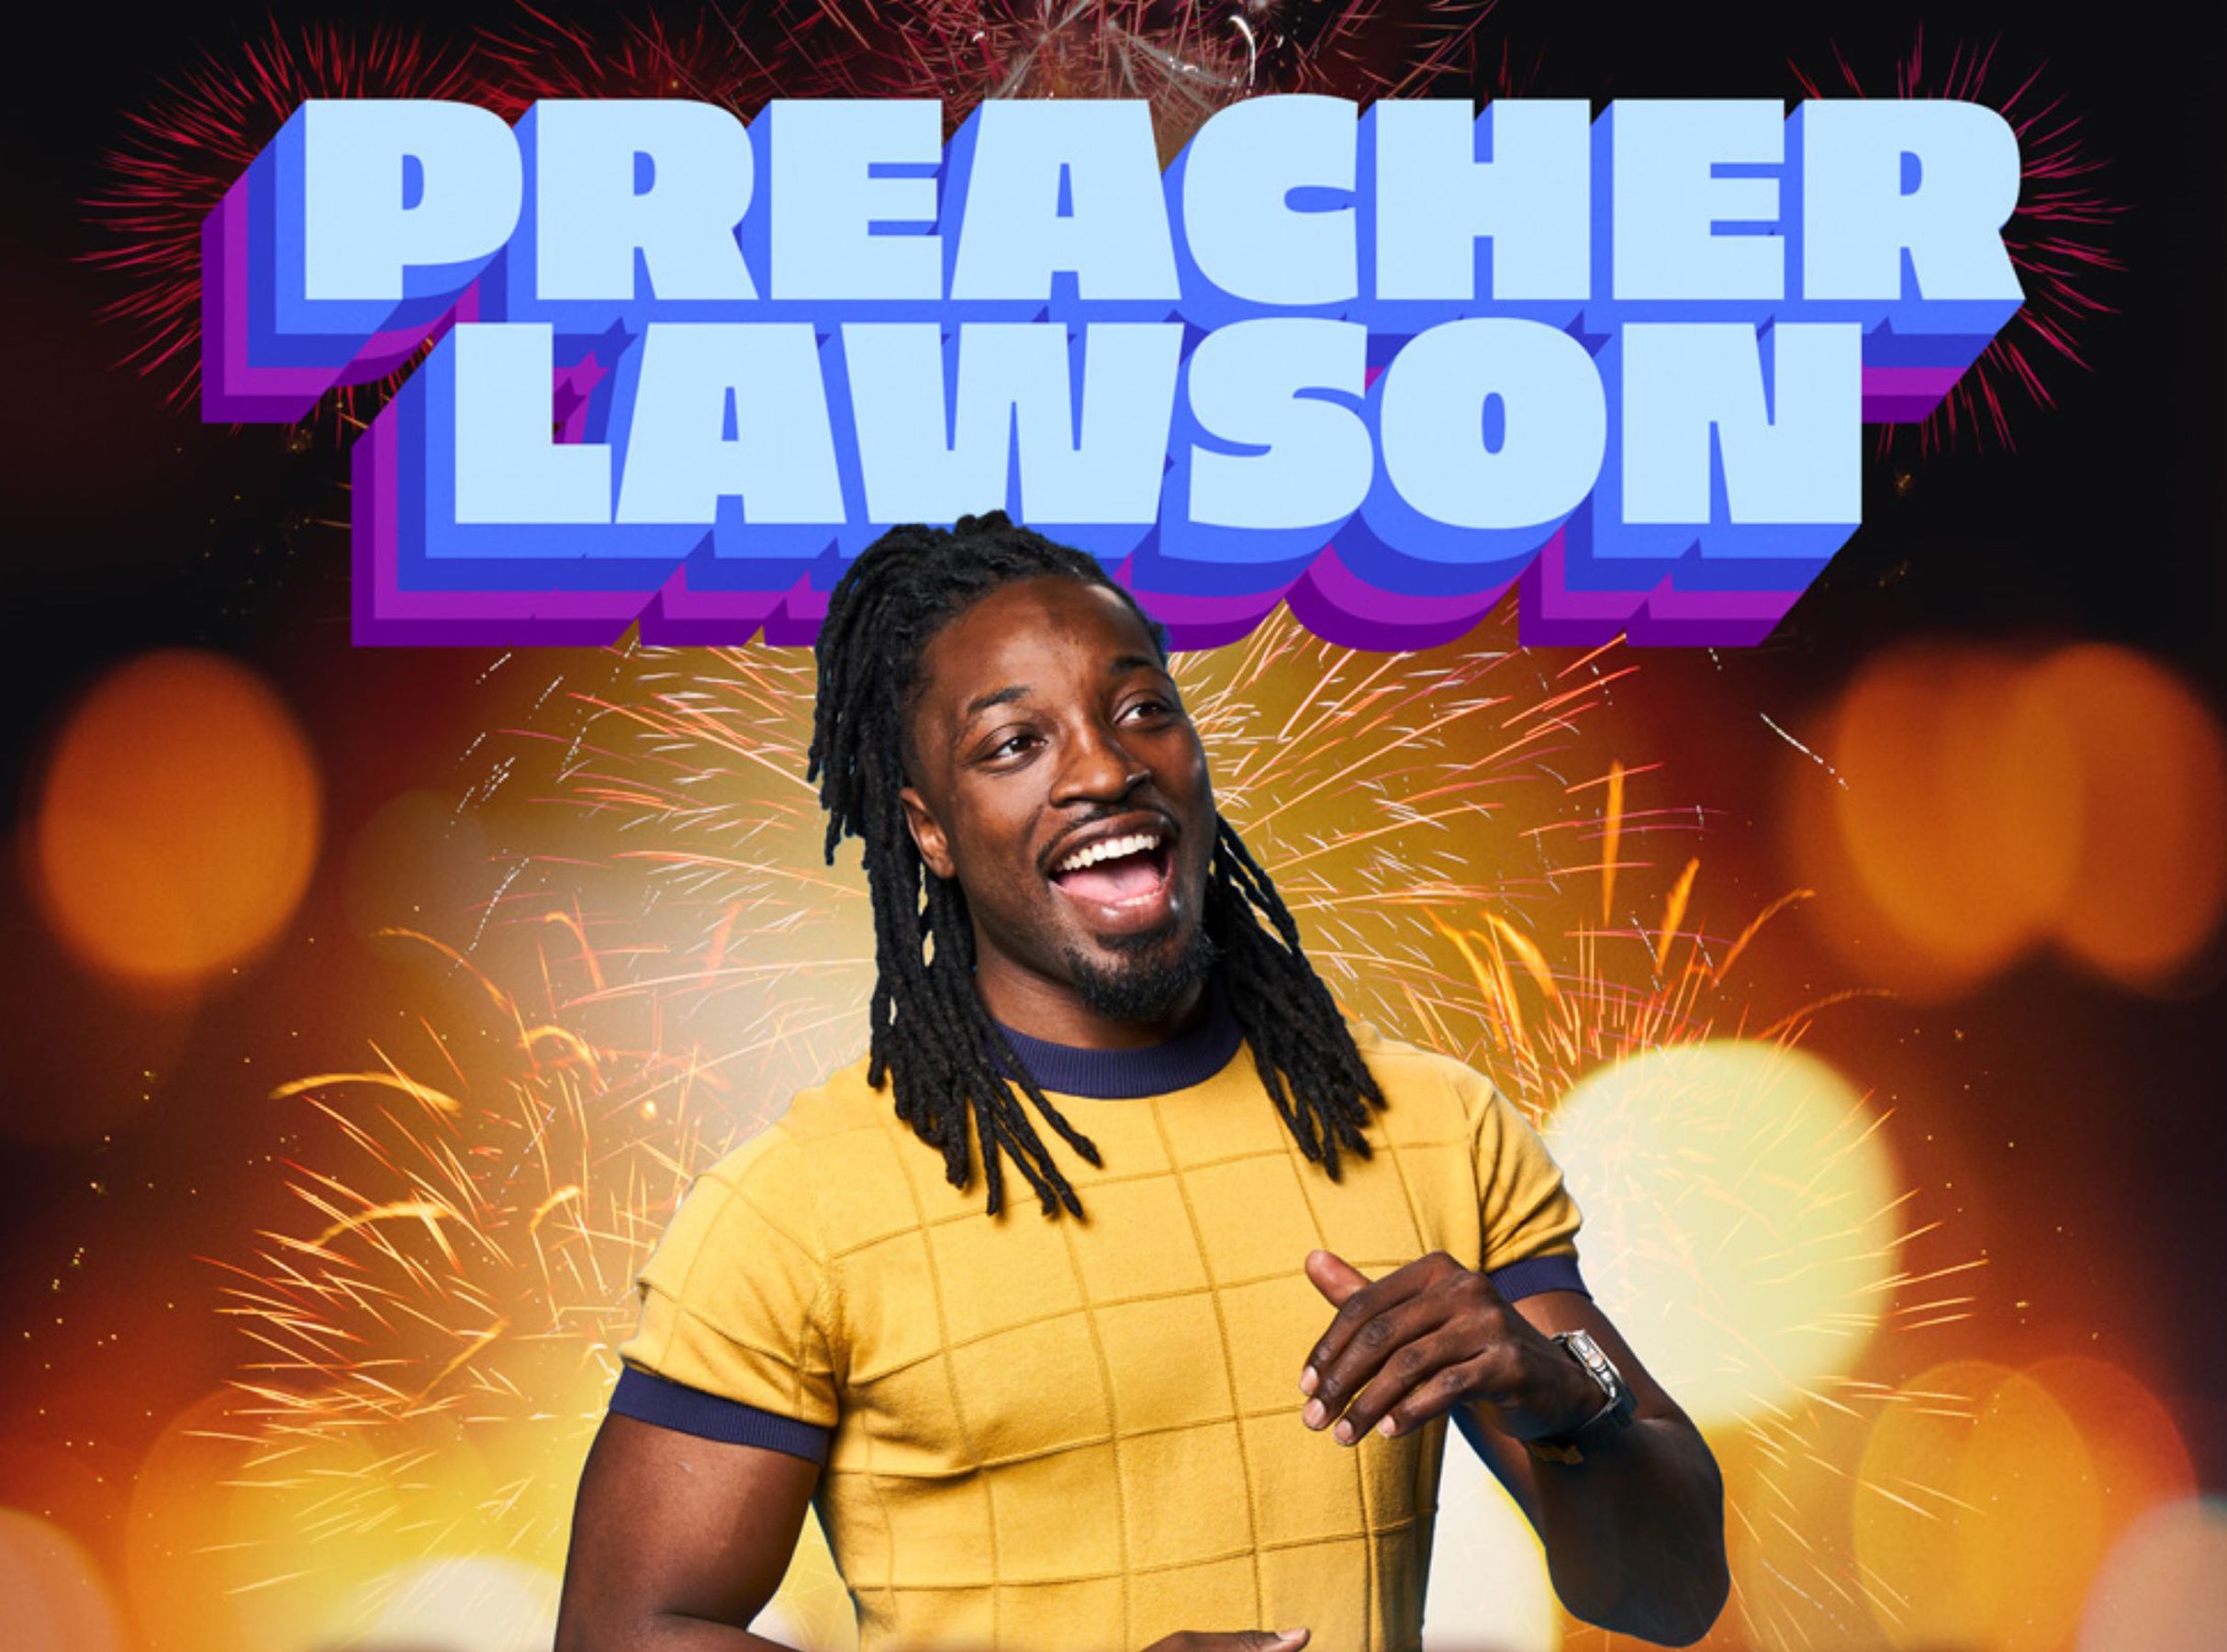 Preacher Lawson in Kansas City promo photo for Ameristar presale offer code